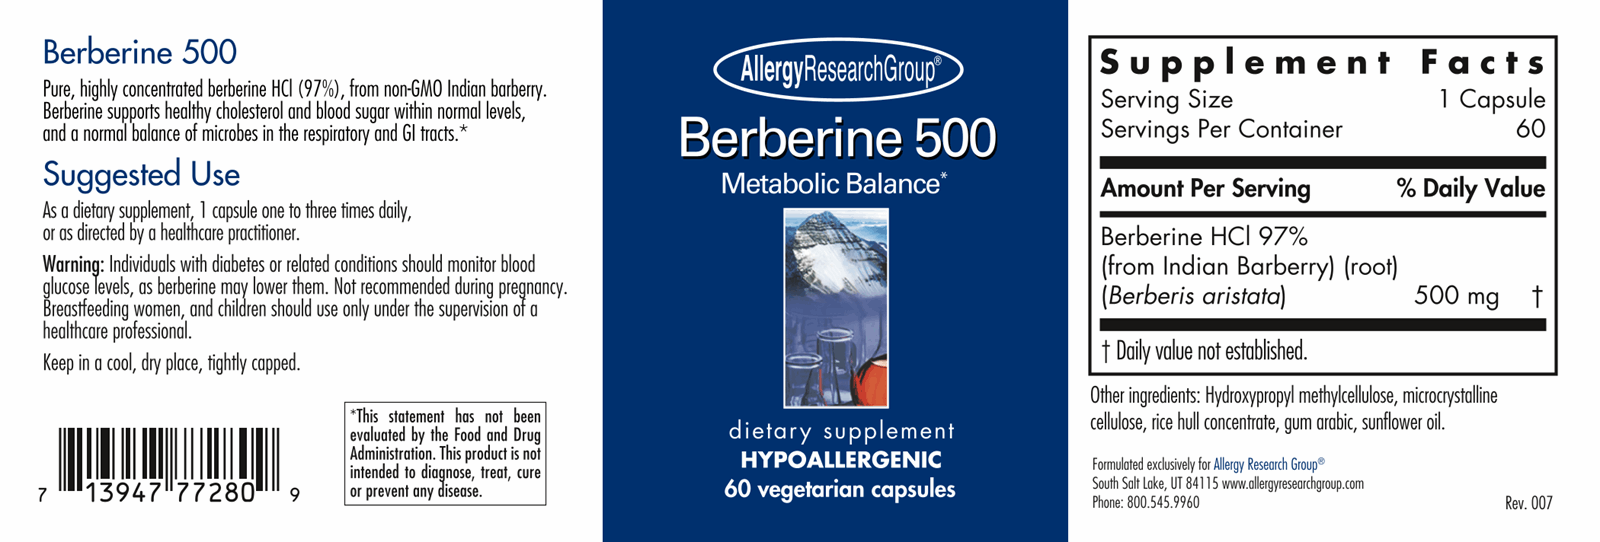 Berberine 500 